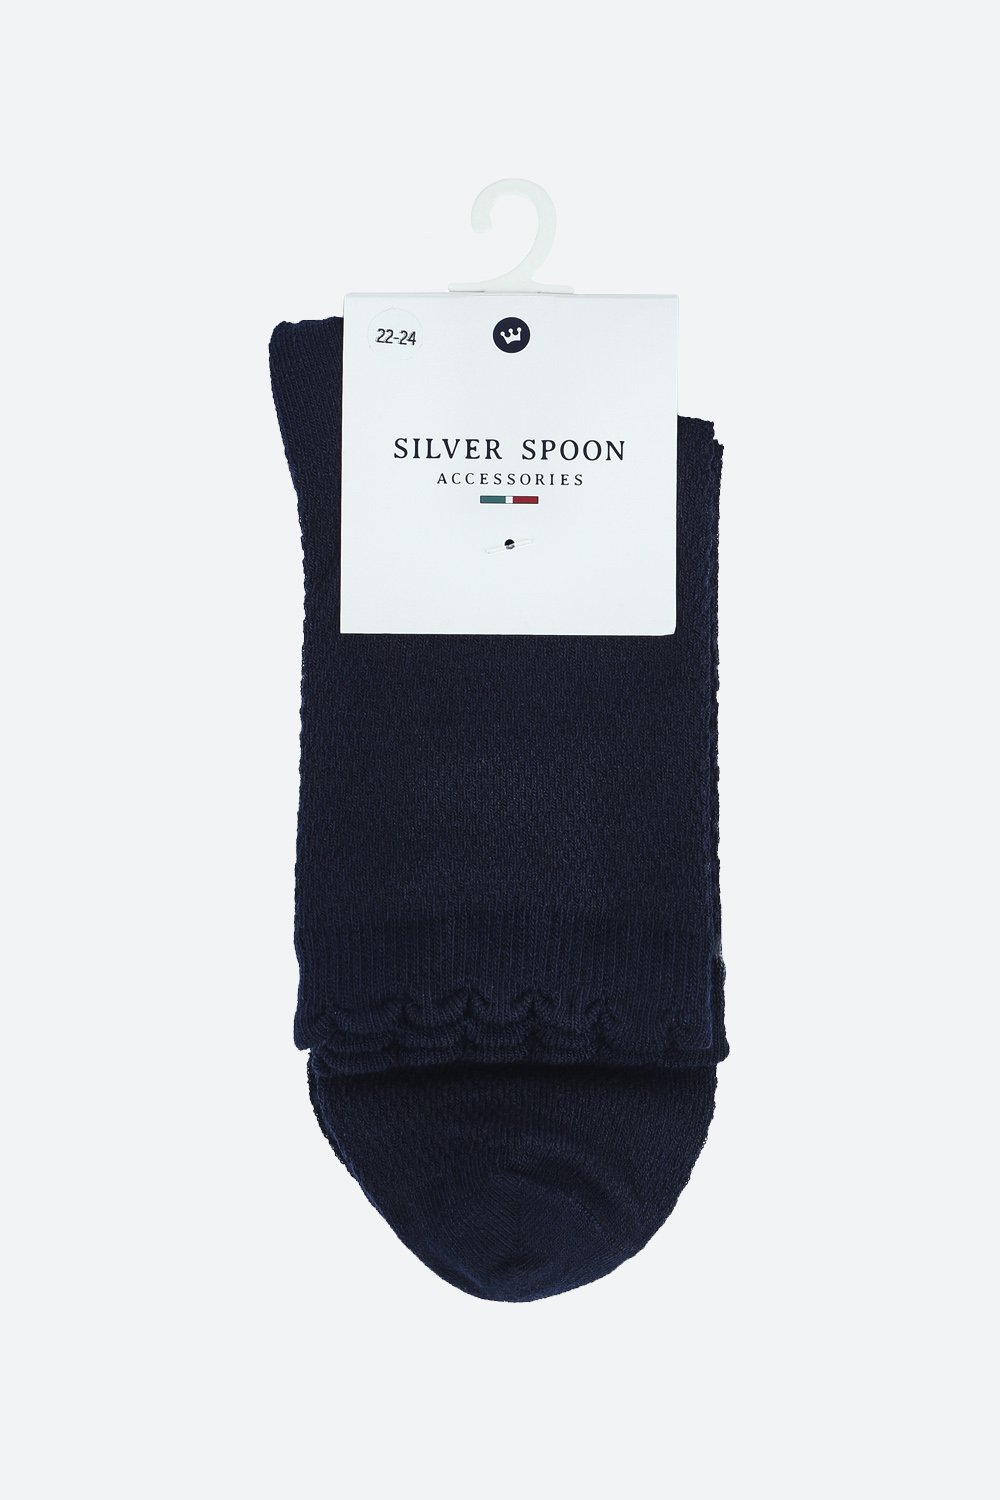 Хлопковые ажурные носки (SAFSG-019-29203-309) Silver spoon